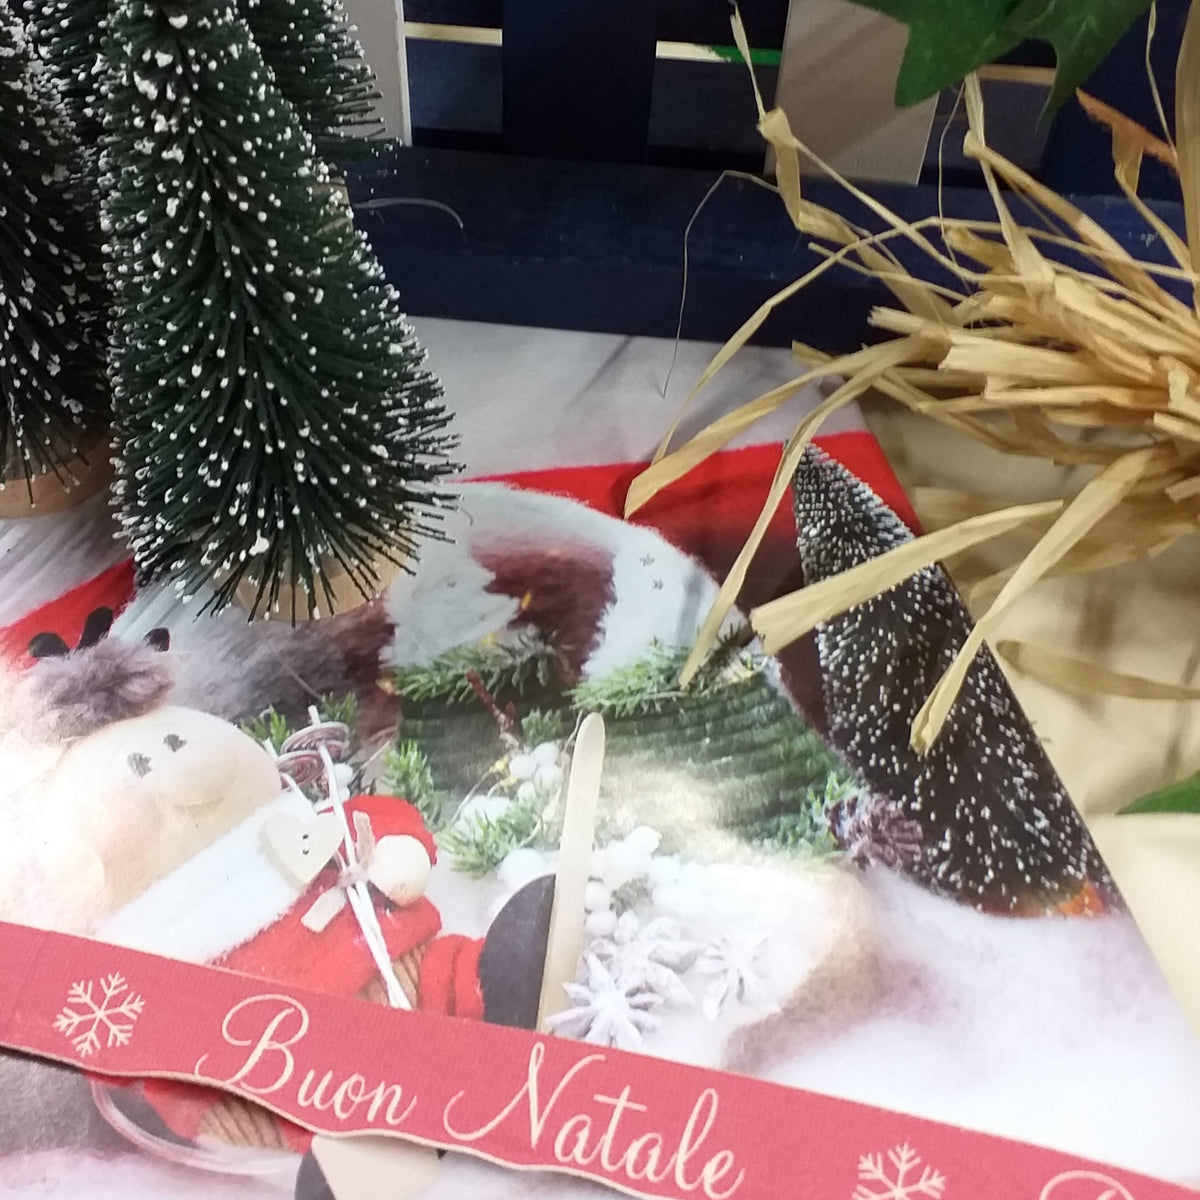 Cannella anice spezie decorazioni natalizie bomboniere biedermeier –  hobbyshopbomboniere